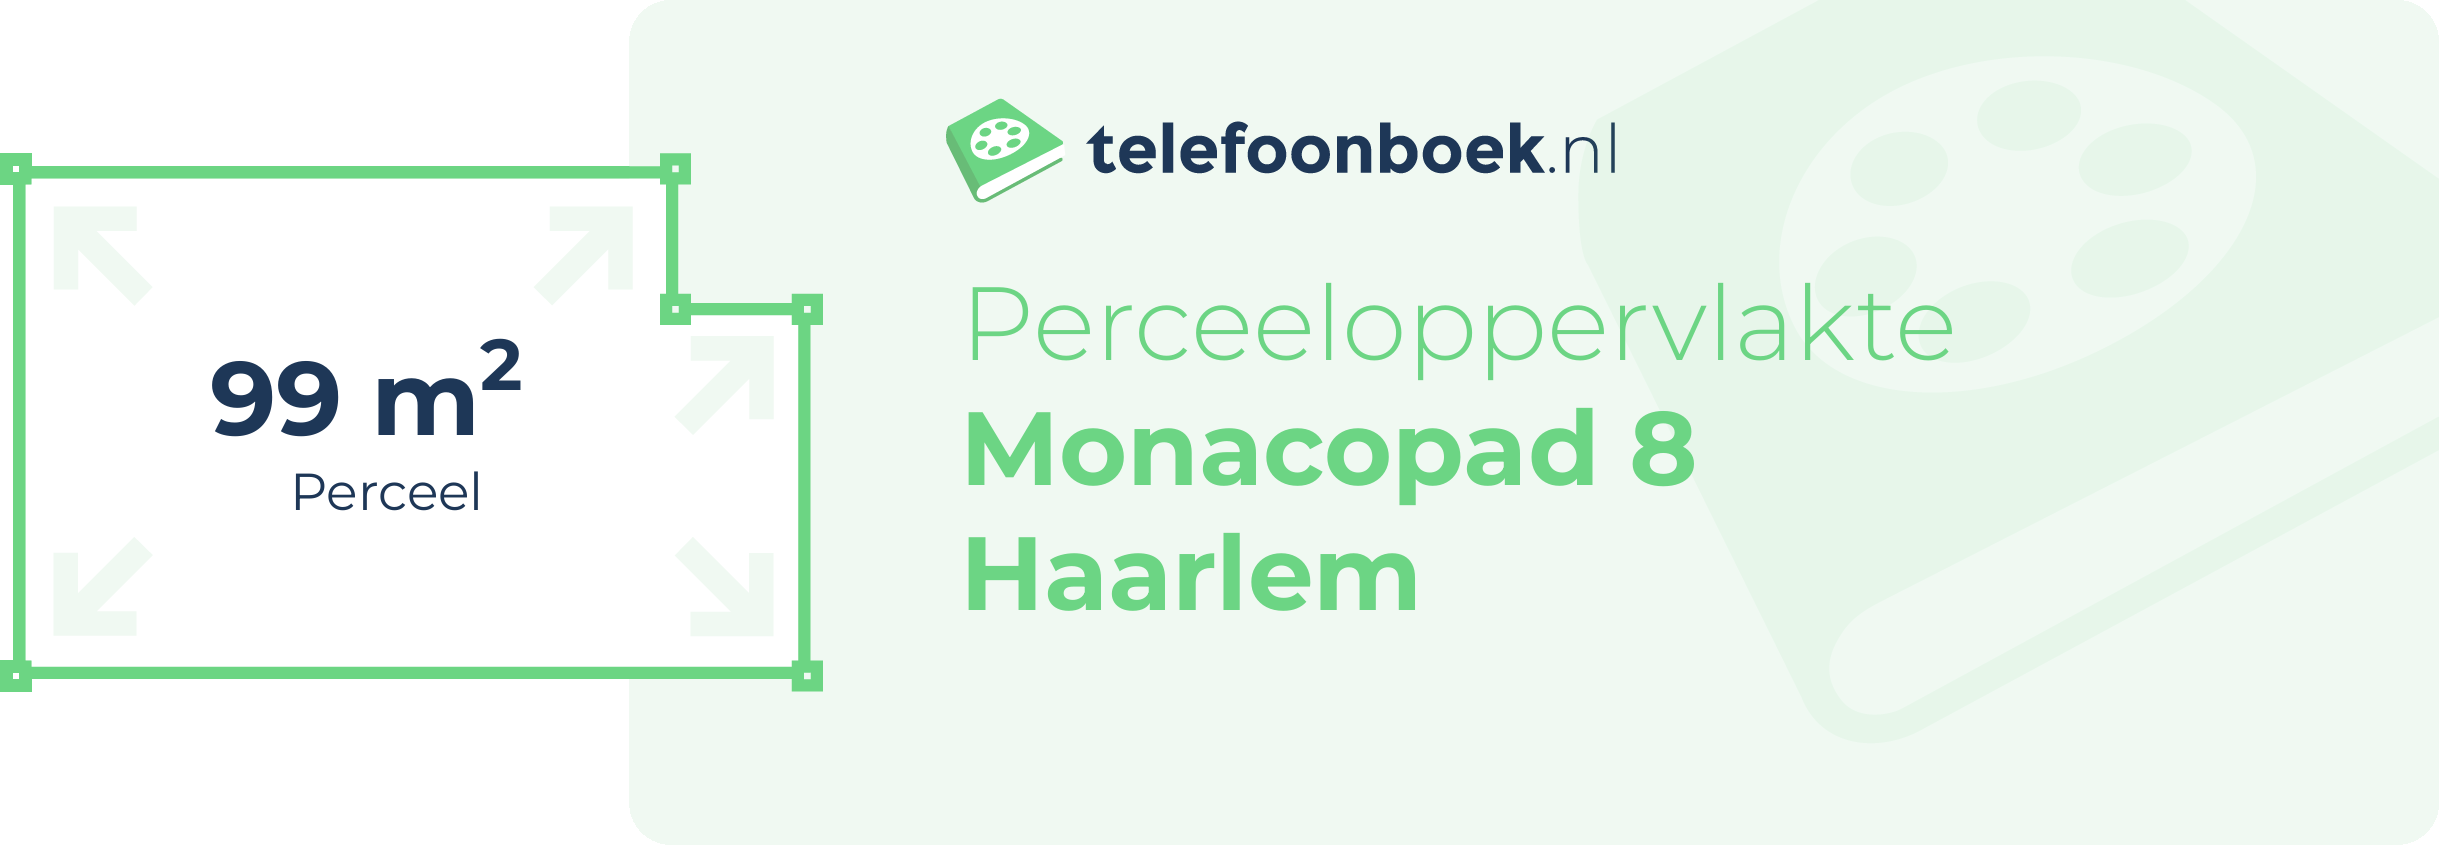 Perceeloppervlakte Monacopad 8 Haarlem